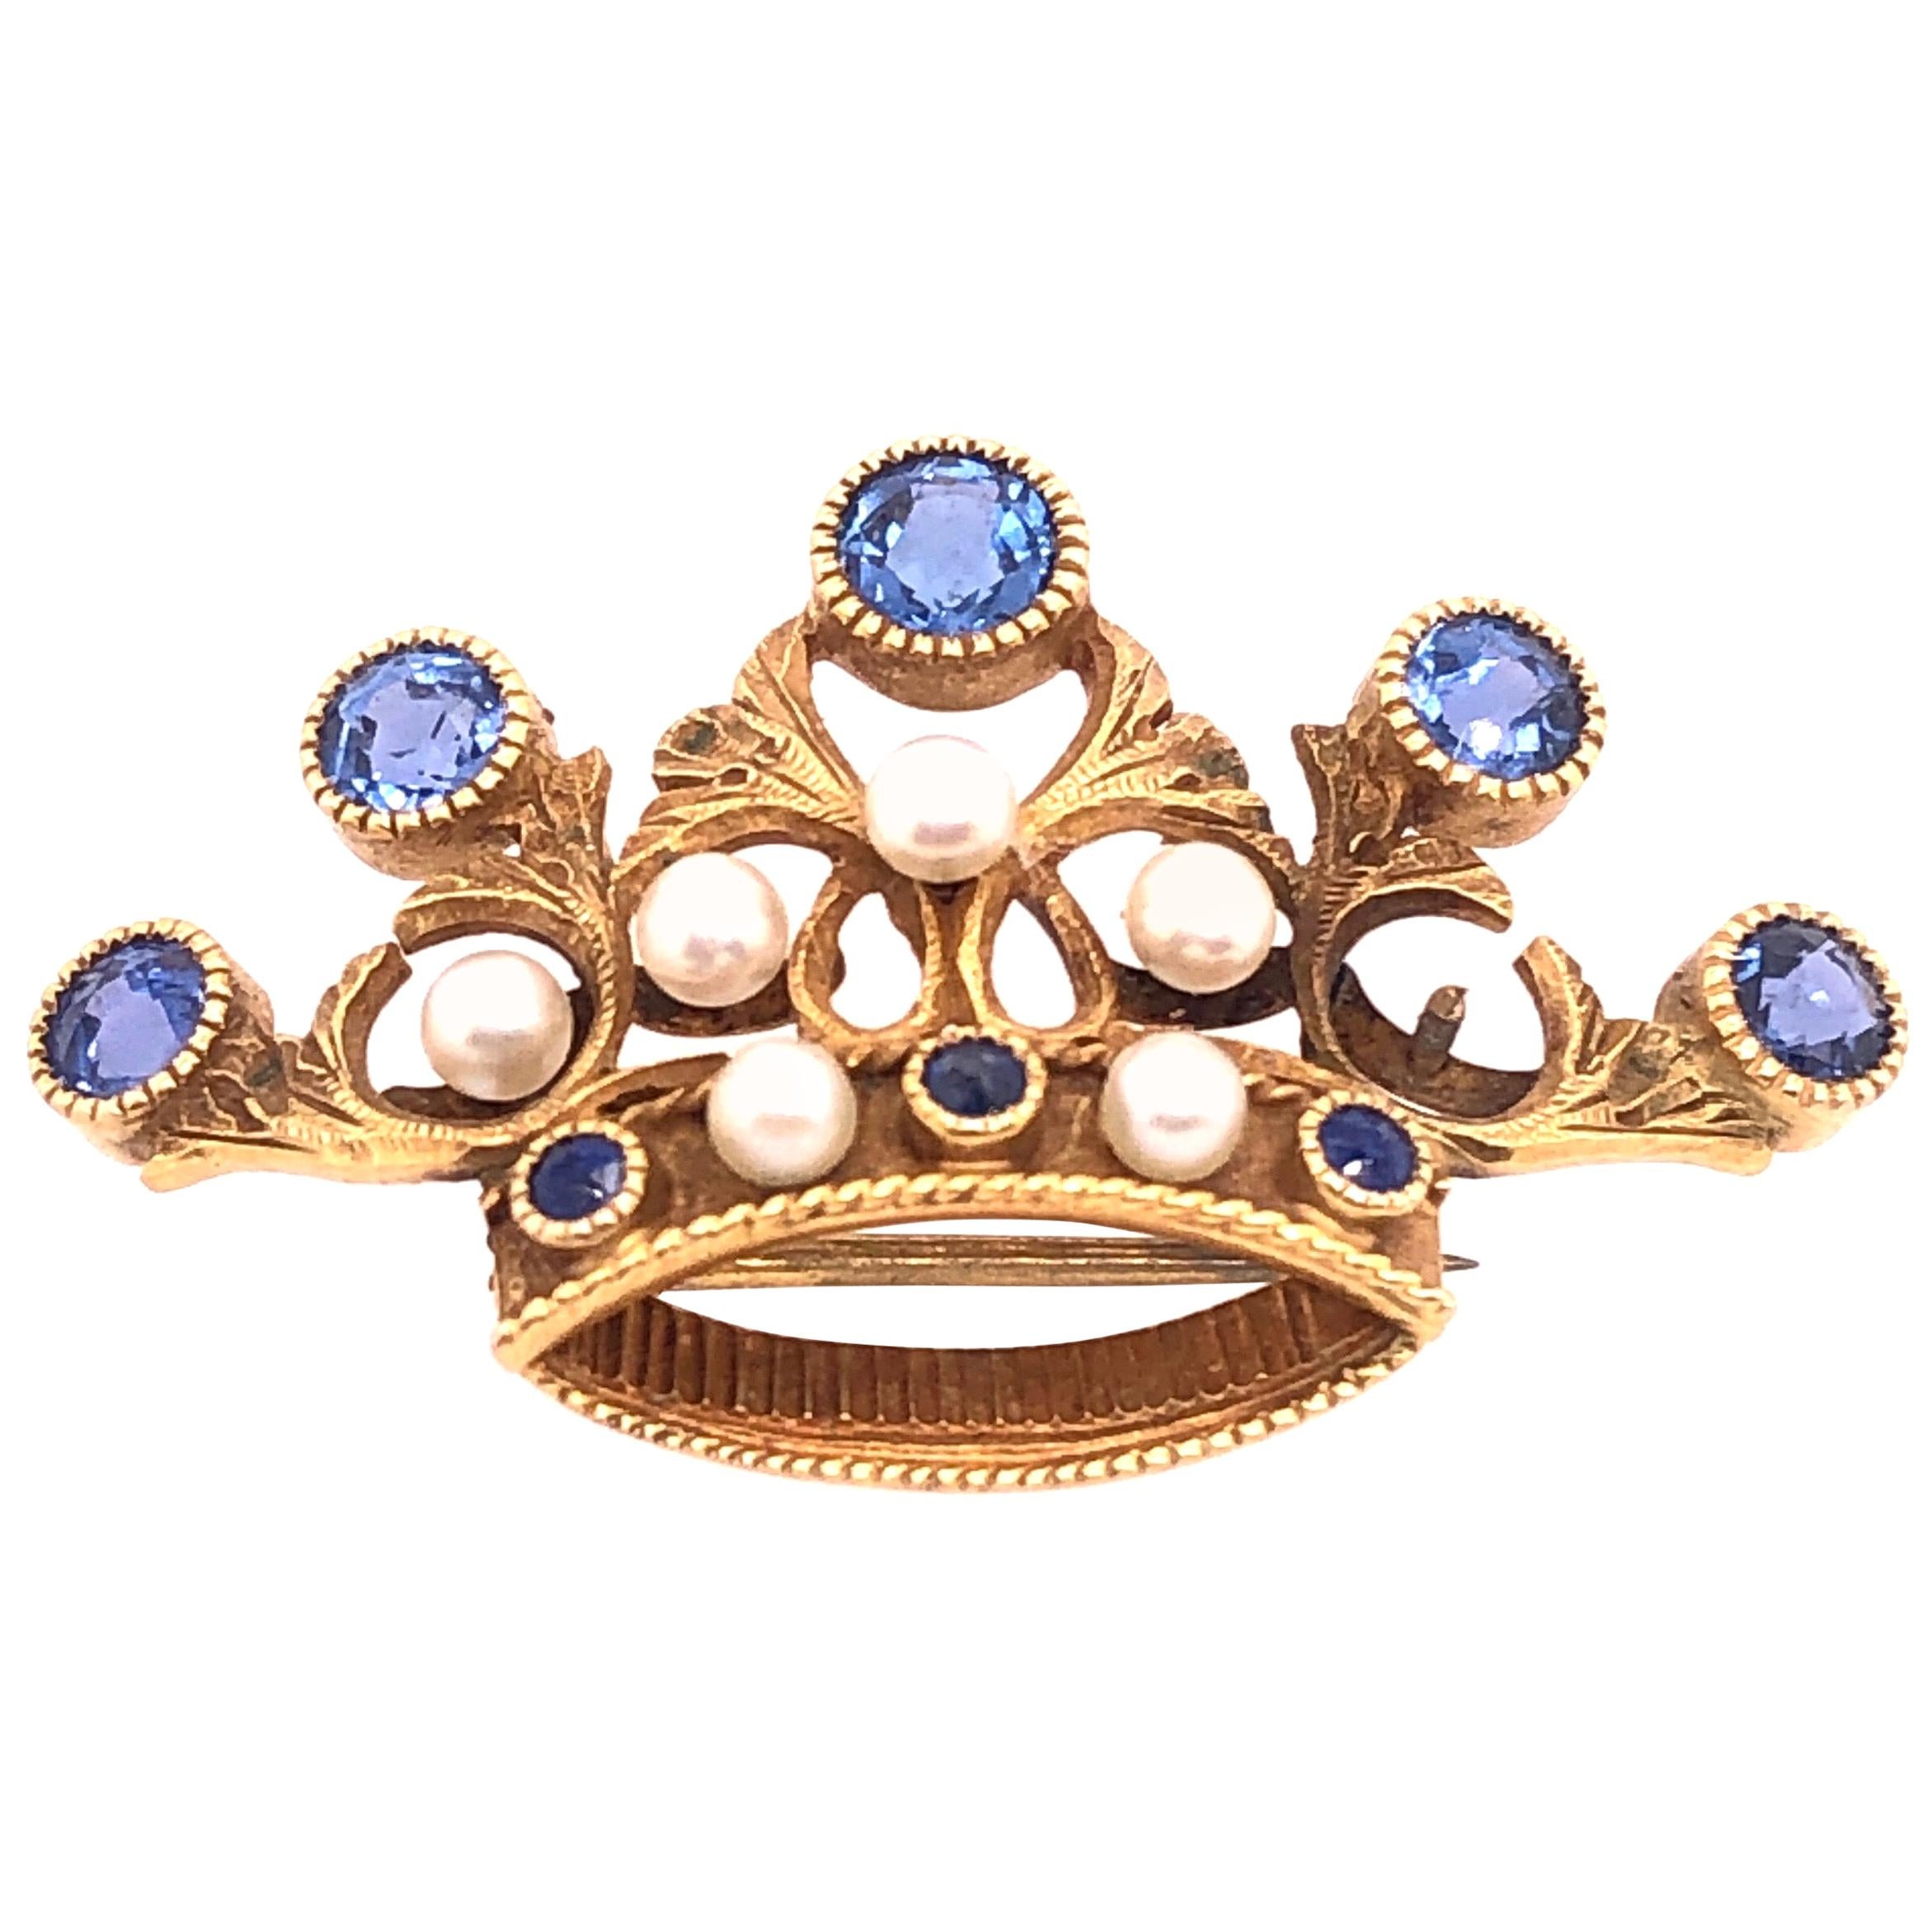 14 Karat Yellow Gold Tiara Crown Pin or Brooch, Pearls and Sapphire